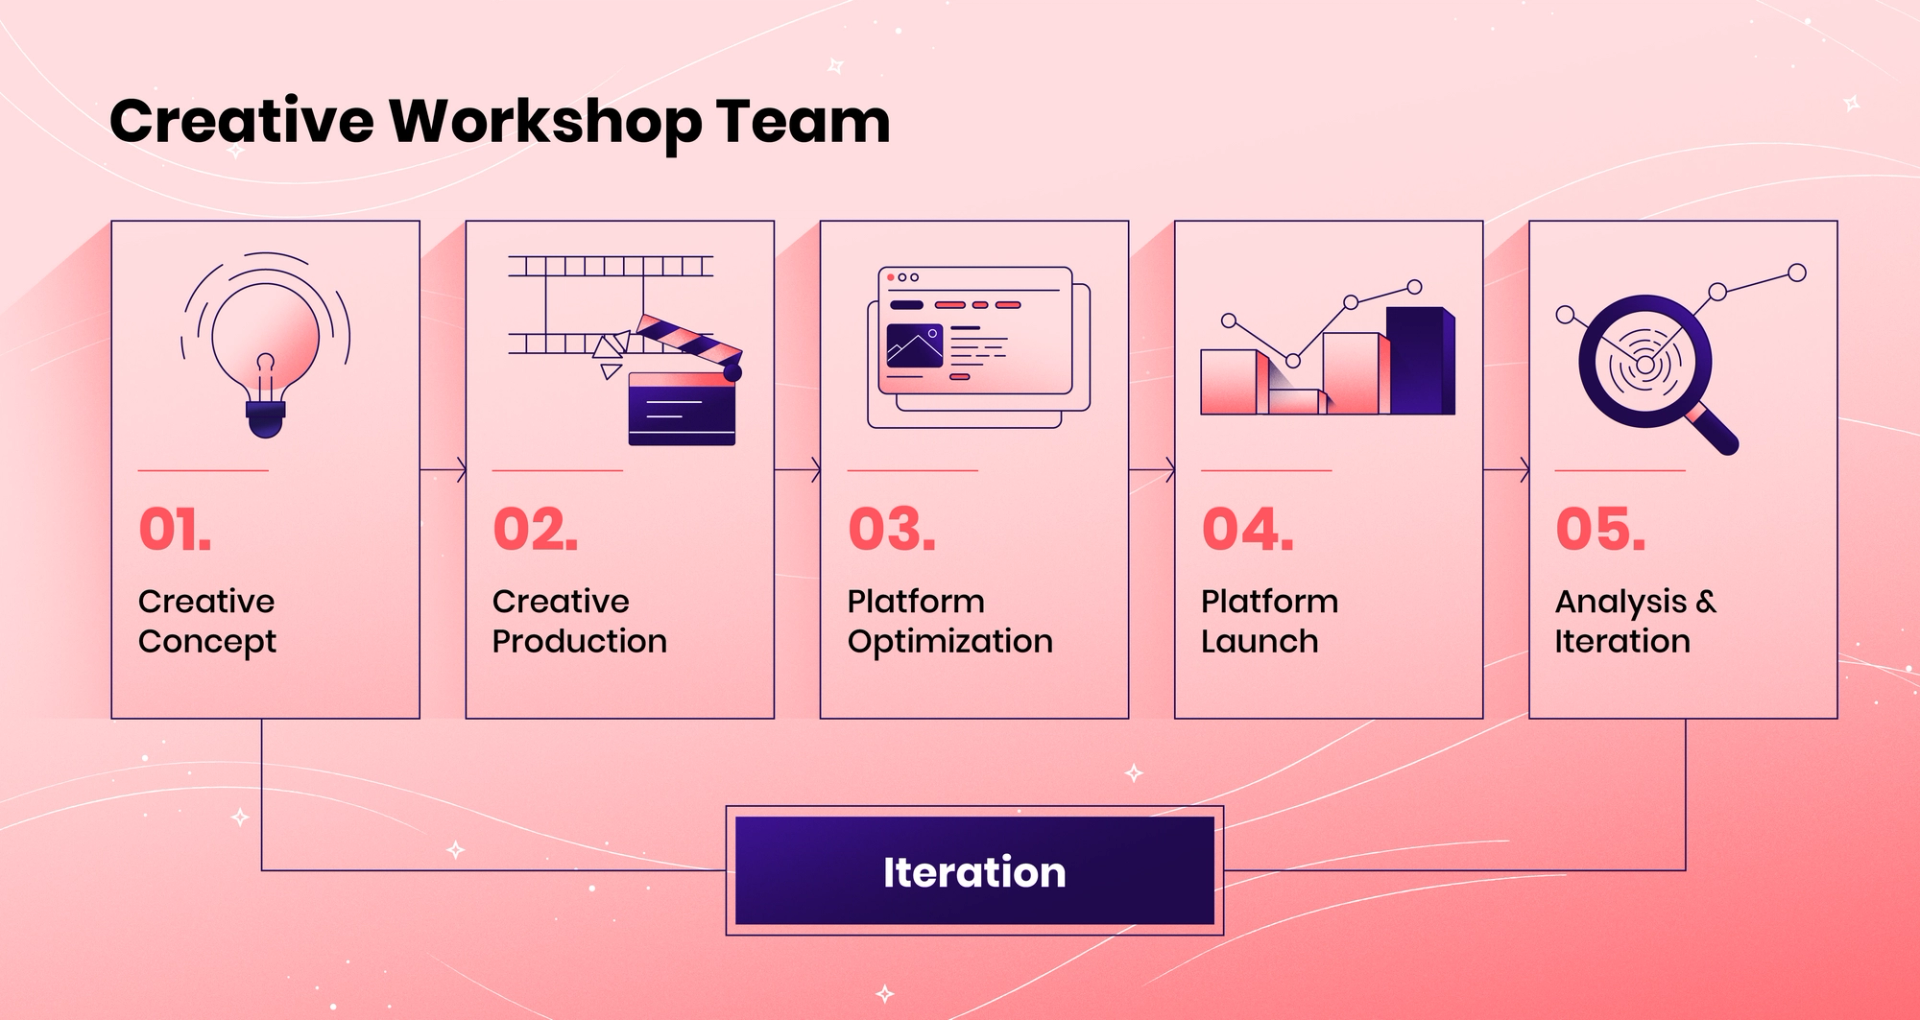 Framework for creative workshop team